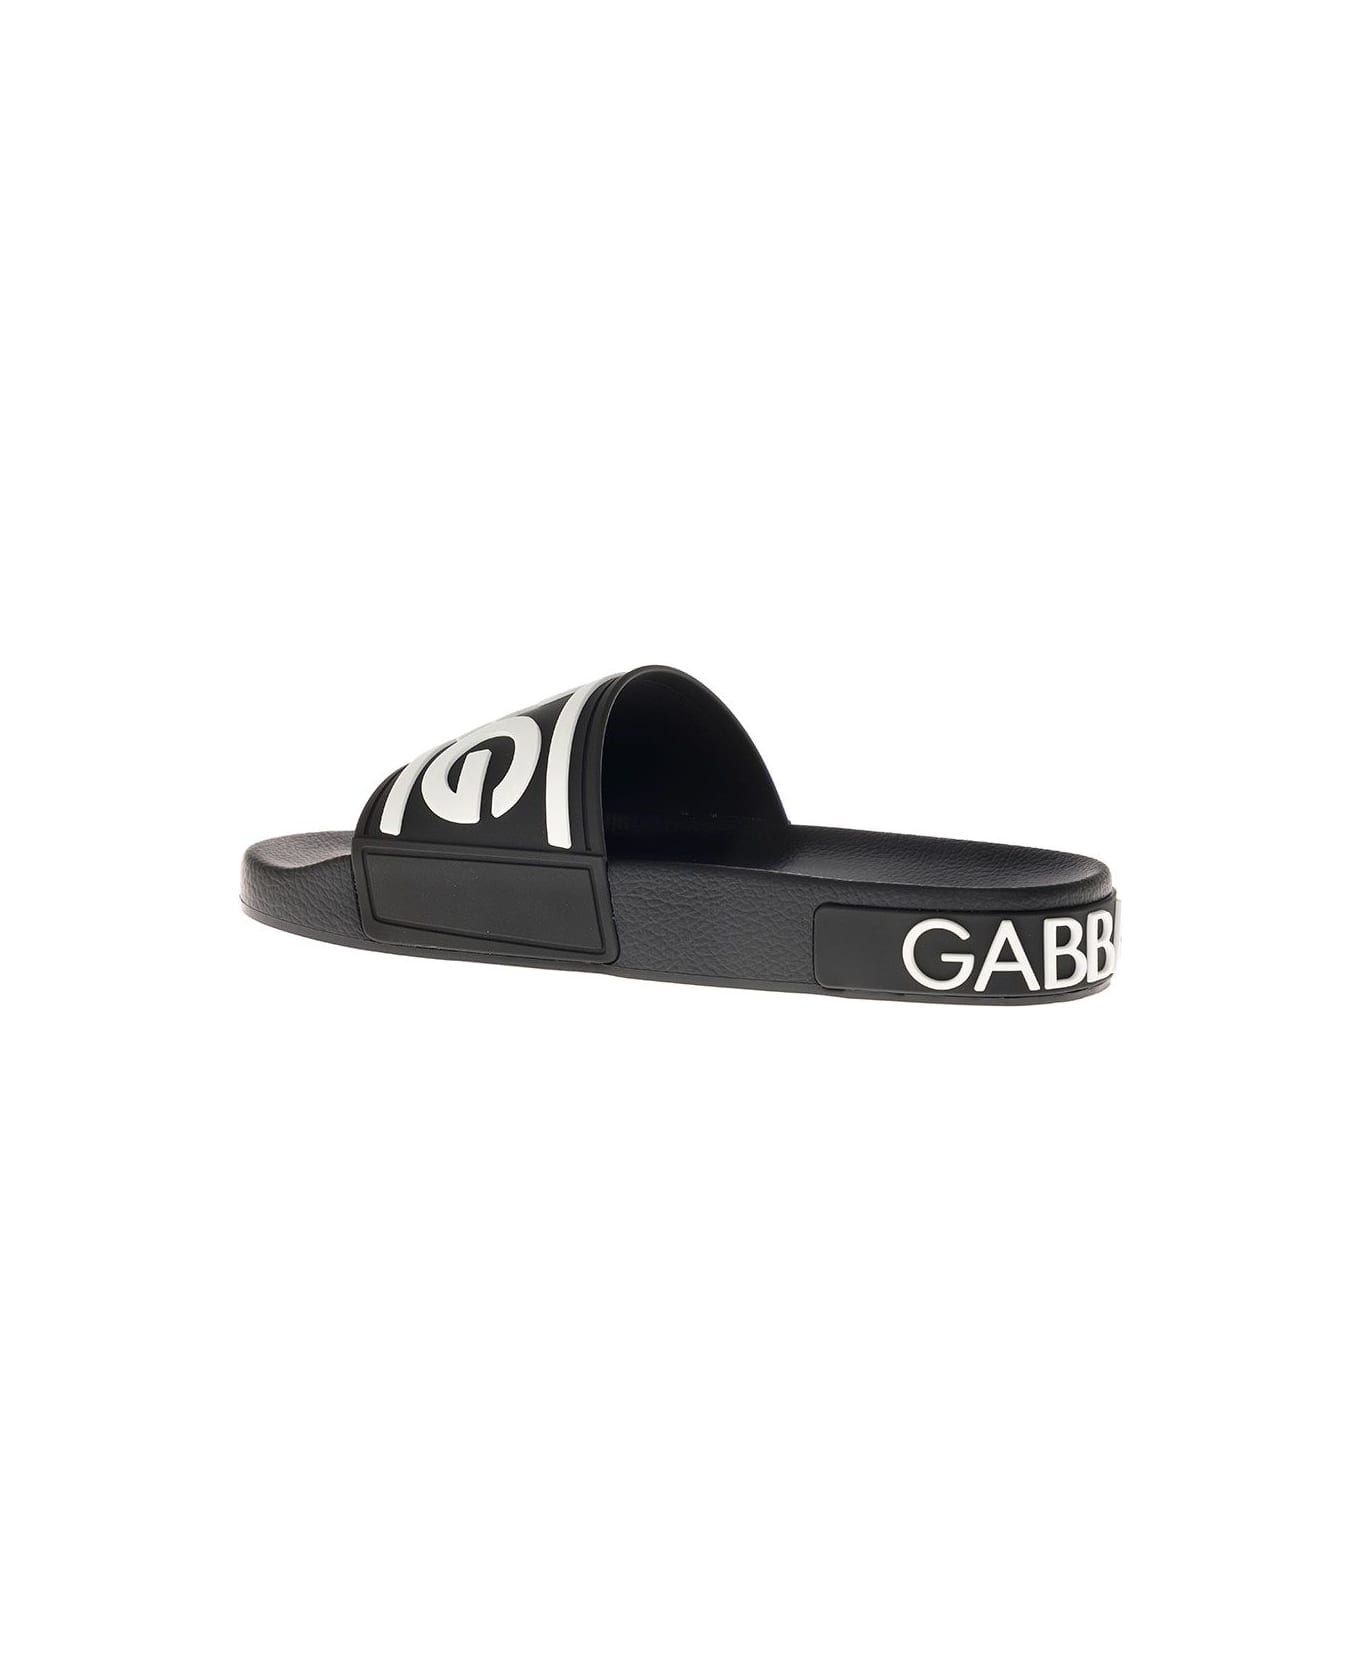 Dolce & Gabbana  Woman's Black Slide Rubber Sandals With Logo - Black